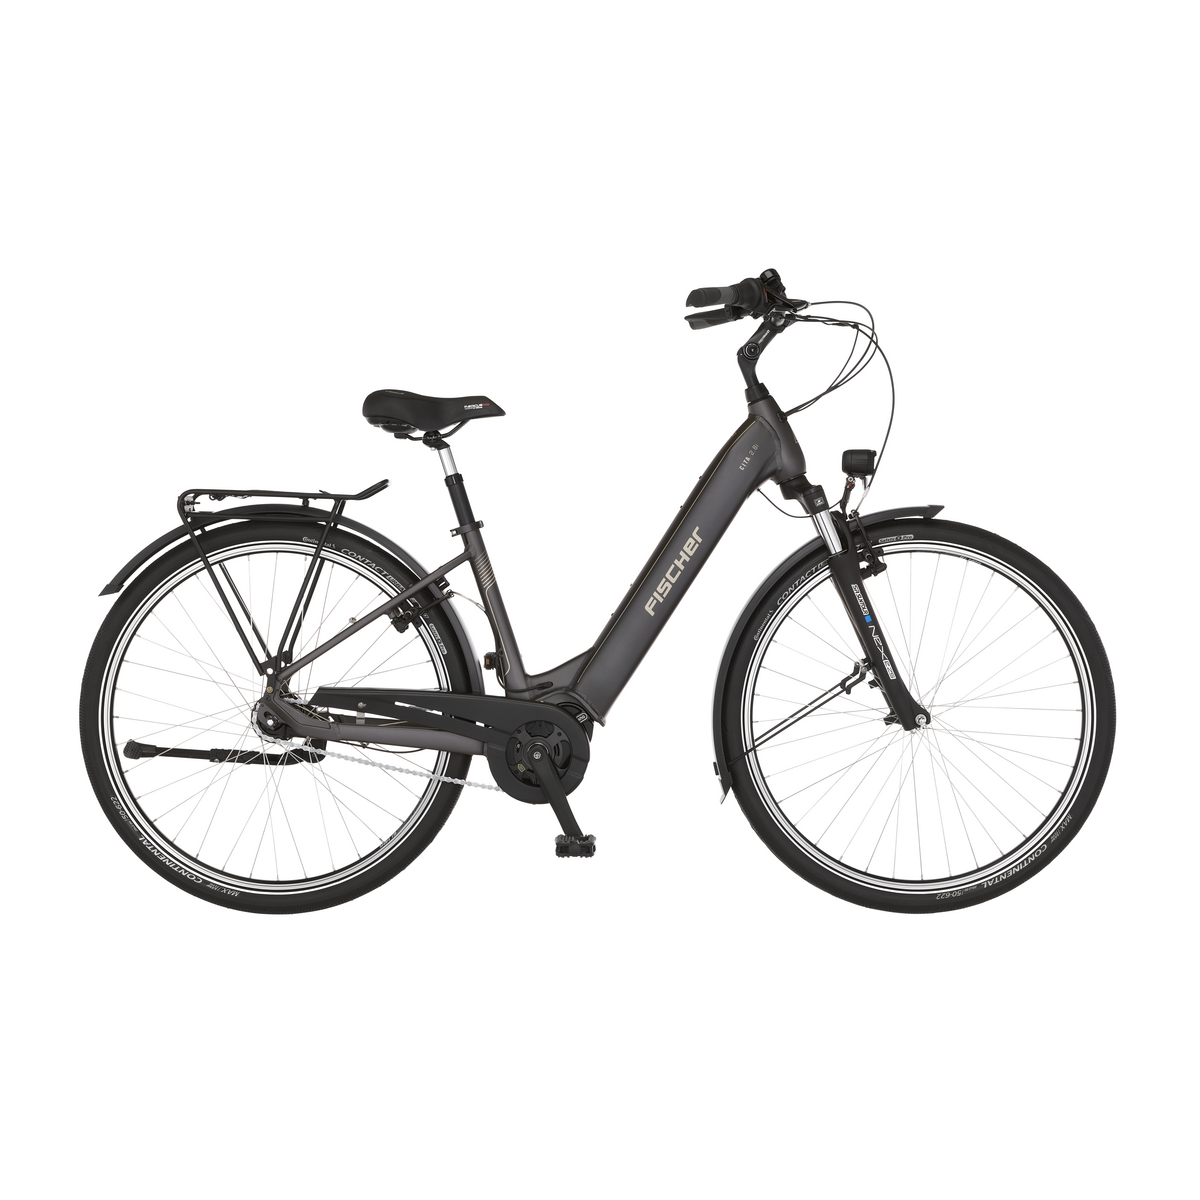 FISCHER CITA 2.8i E-Bike - zementgreige, 28 Zoll, RH 43 cm, 522 Wh  Generalüberholt | E-Bikes City Outlet | E-Bikes - Outlet | Outlet | Sale%